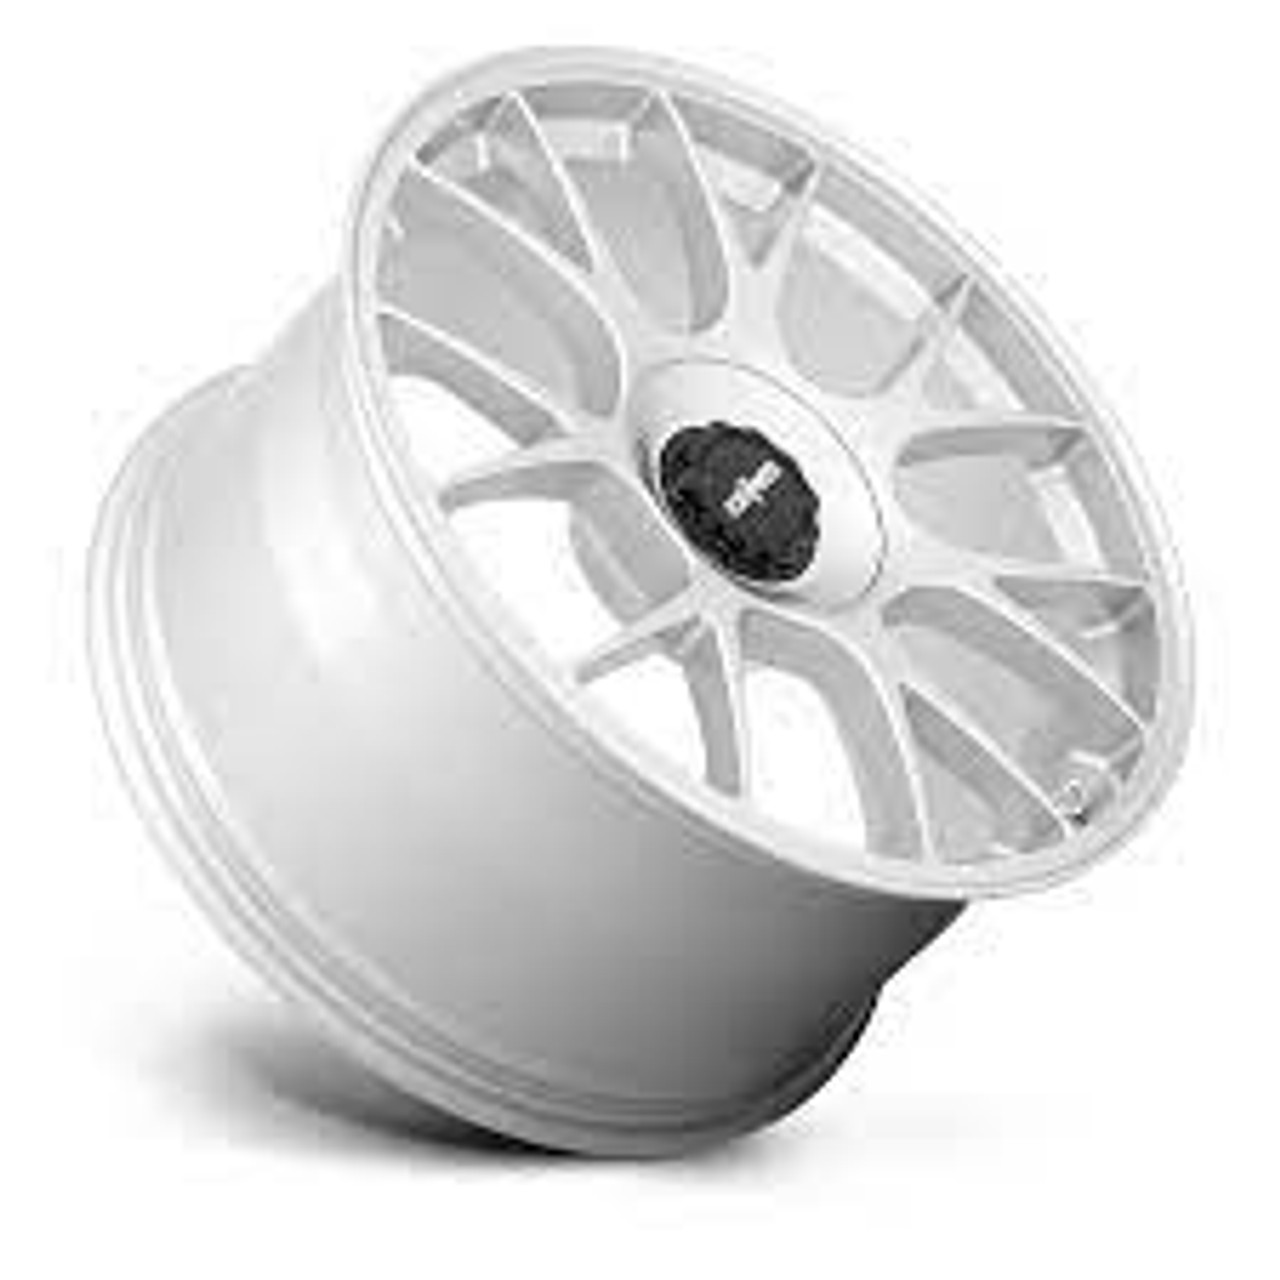 Rotiform R902 TUF Wheel 20x10.5 5x114.3 45 Offset - Gloss Silver